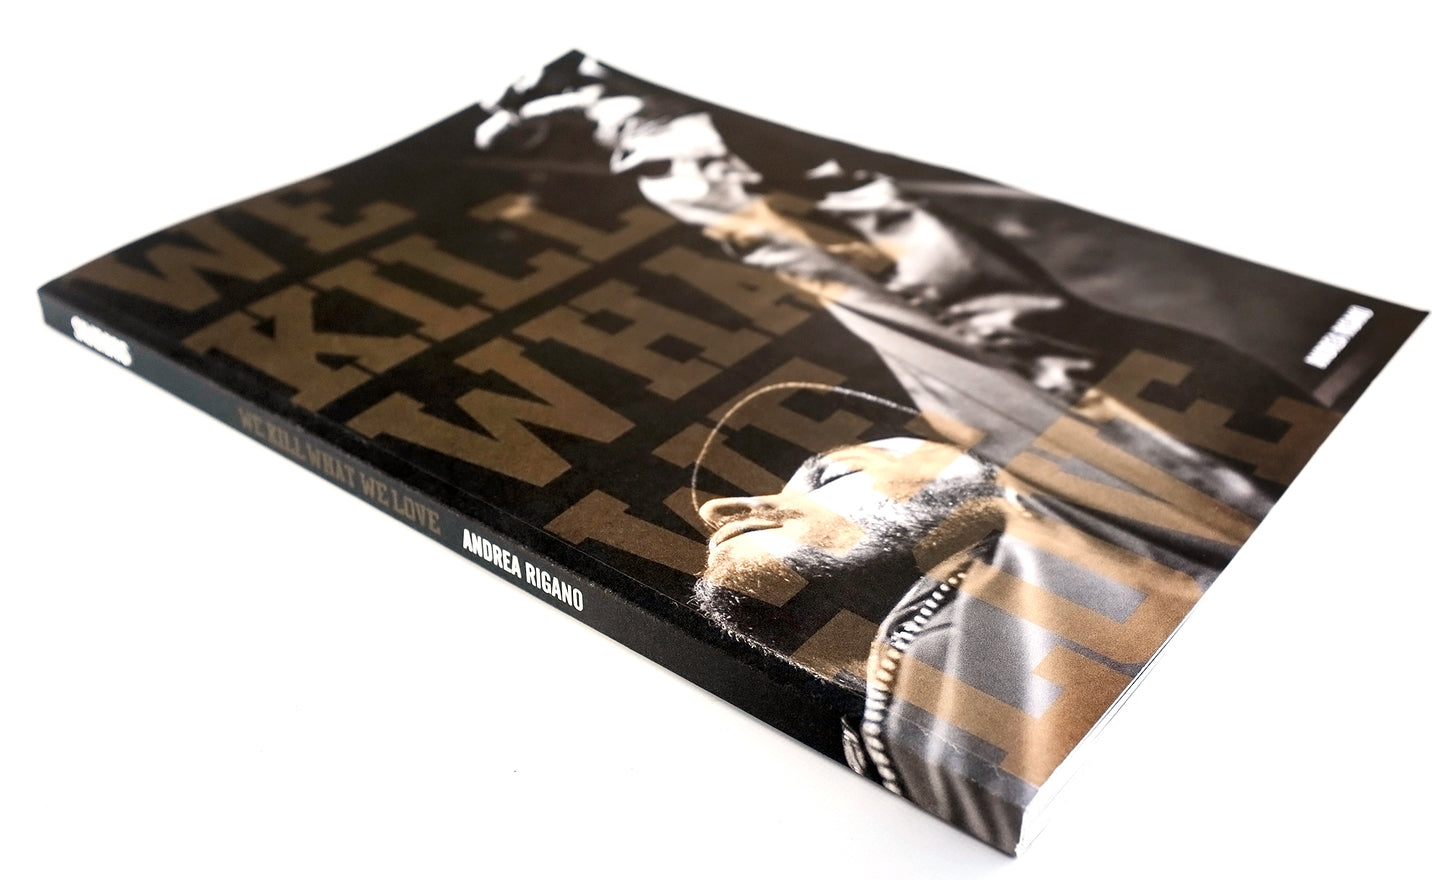 "5OM x WKWWL" sport grey hoodie + book